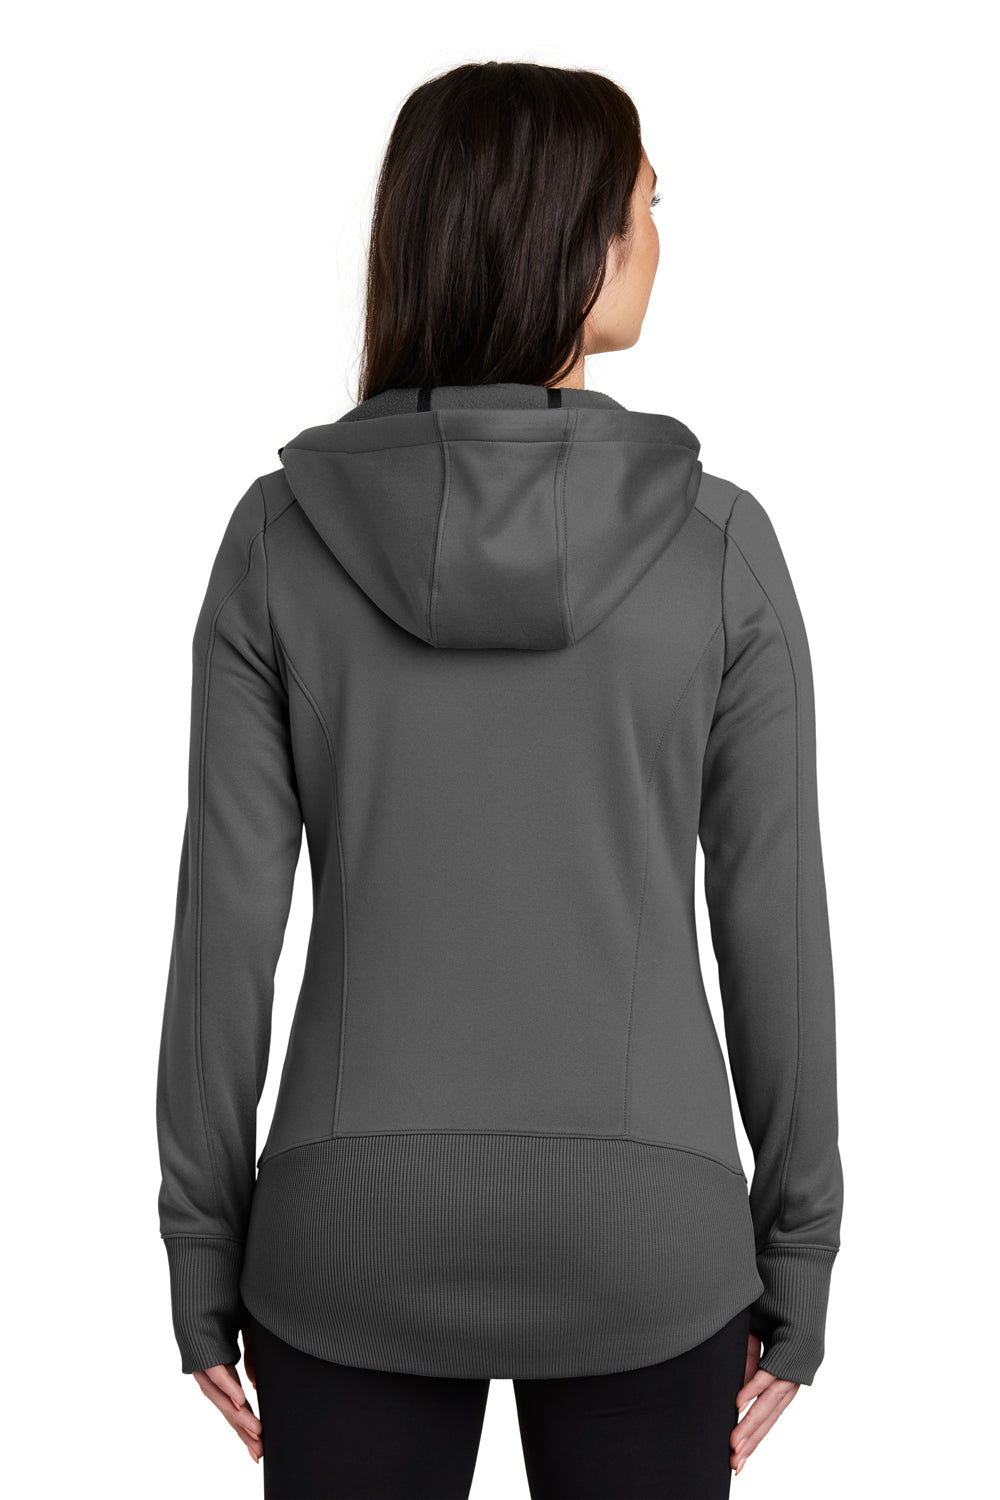 New Era LNEA522 Womens Venue Moisture Wicking Fleece Full Zip Hooded Sweatshirt Hoodie Graphite Grey Back